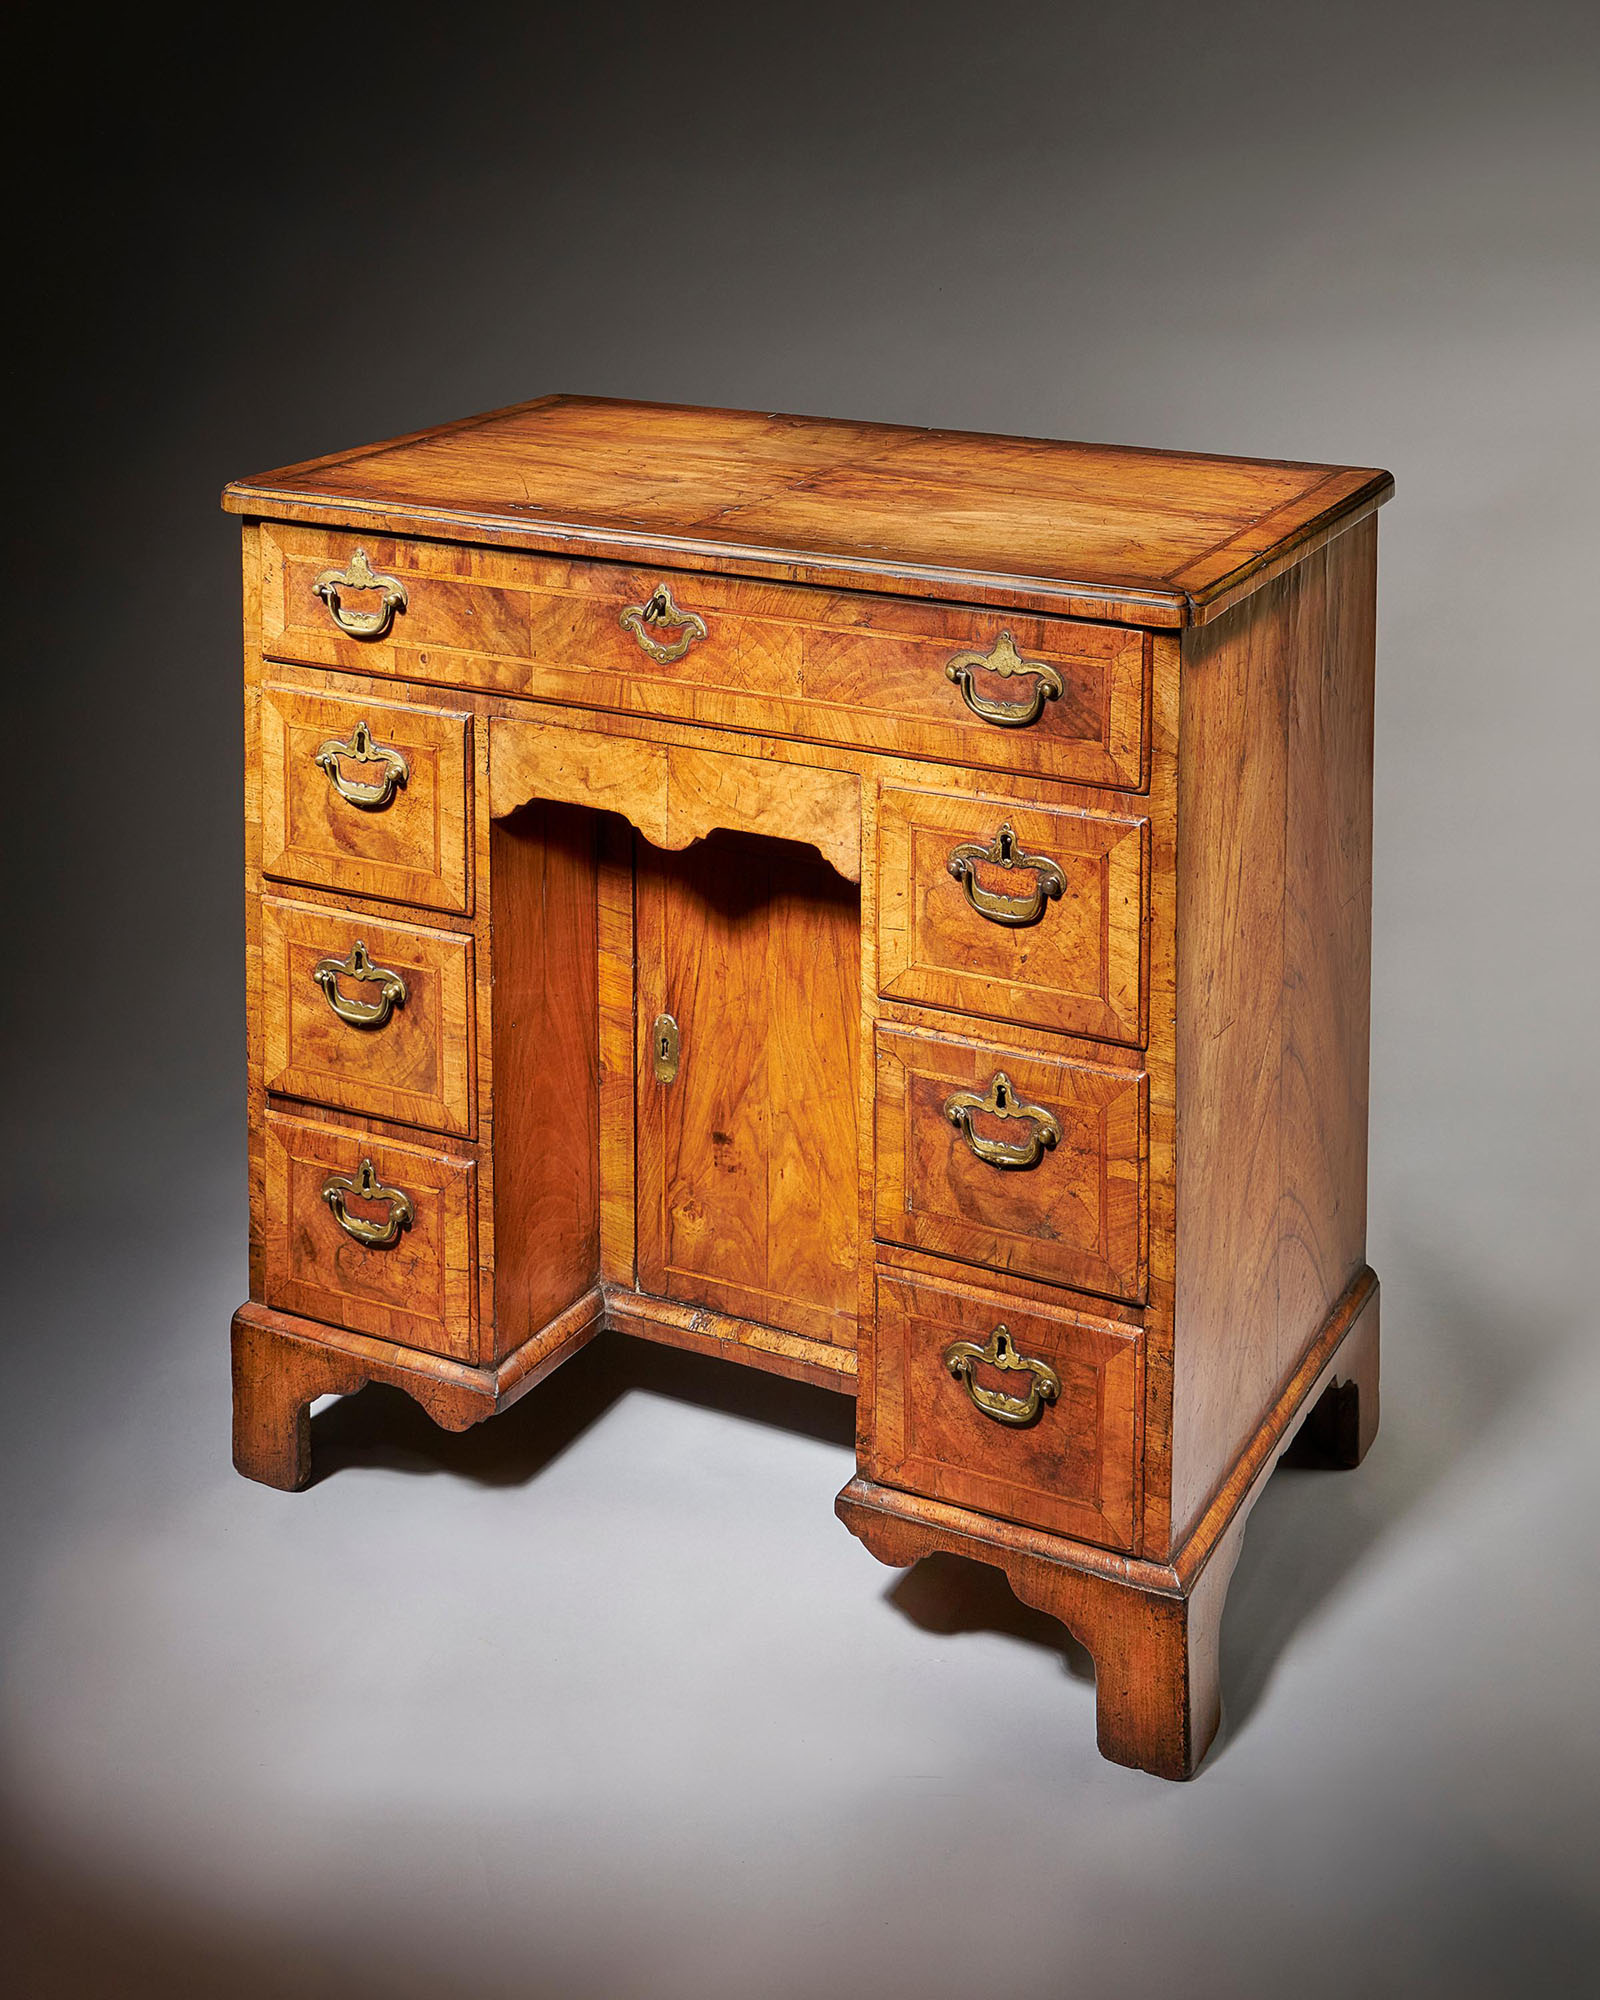 Figured Walnut George II 18th Century Kneehole Desk Attributed to Elizabeth Bell